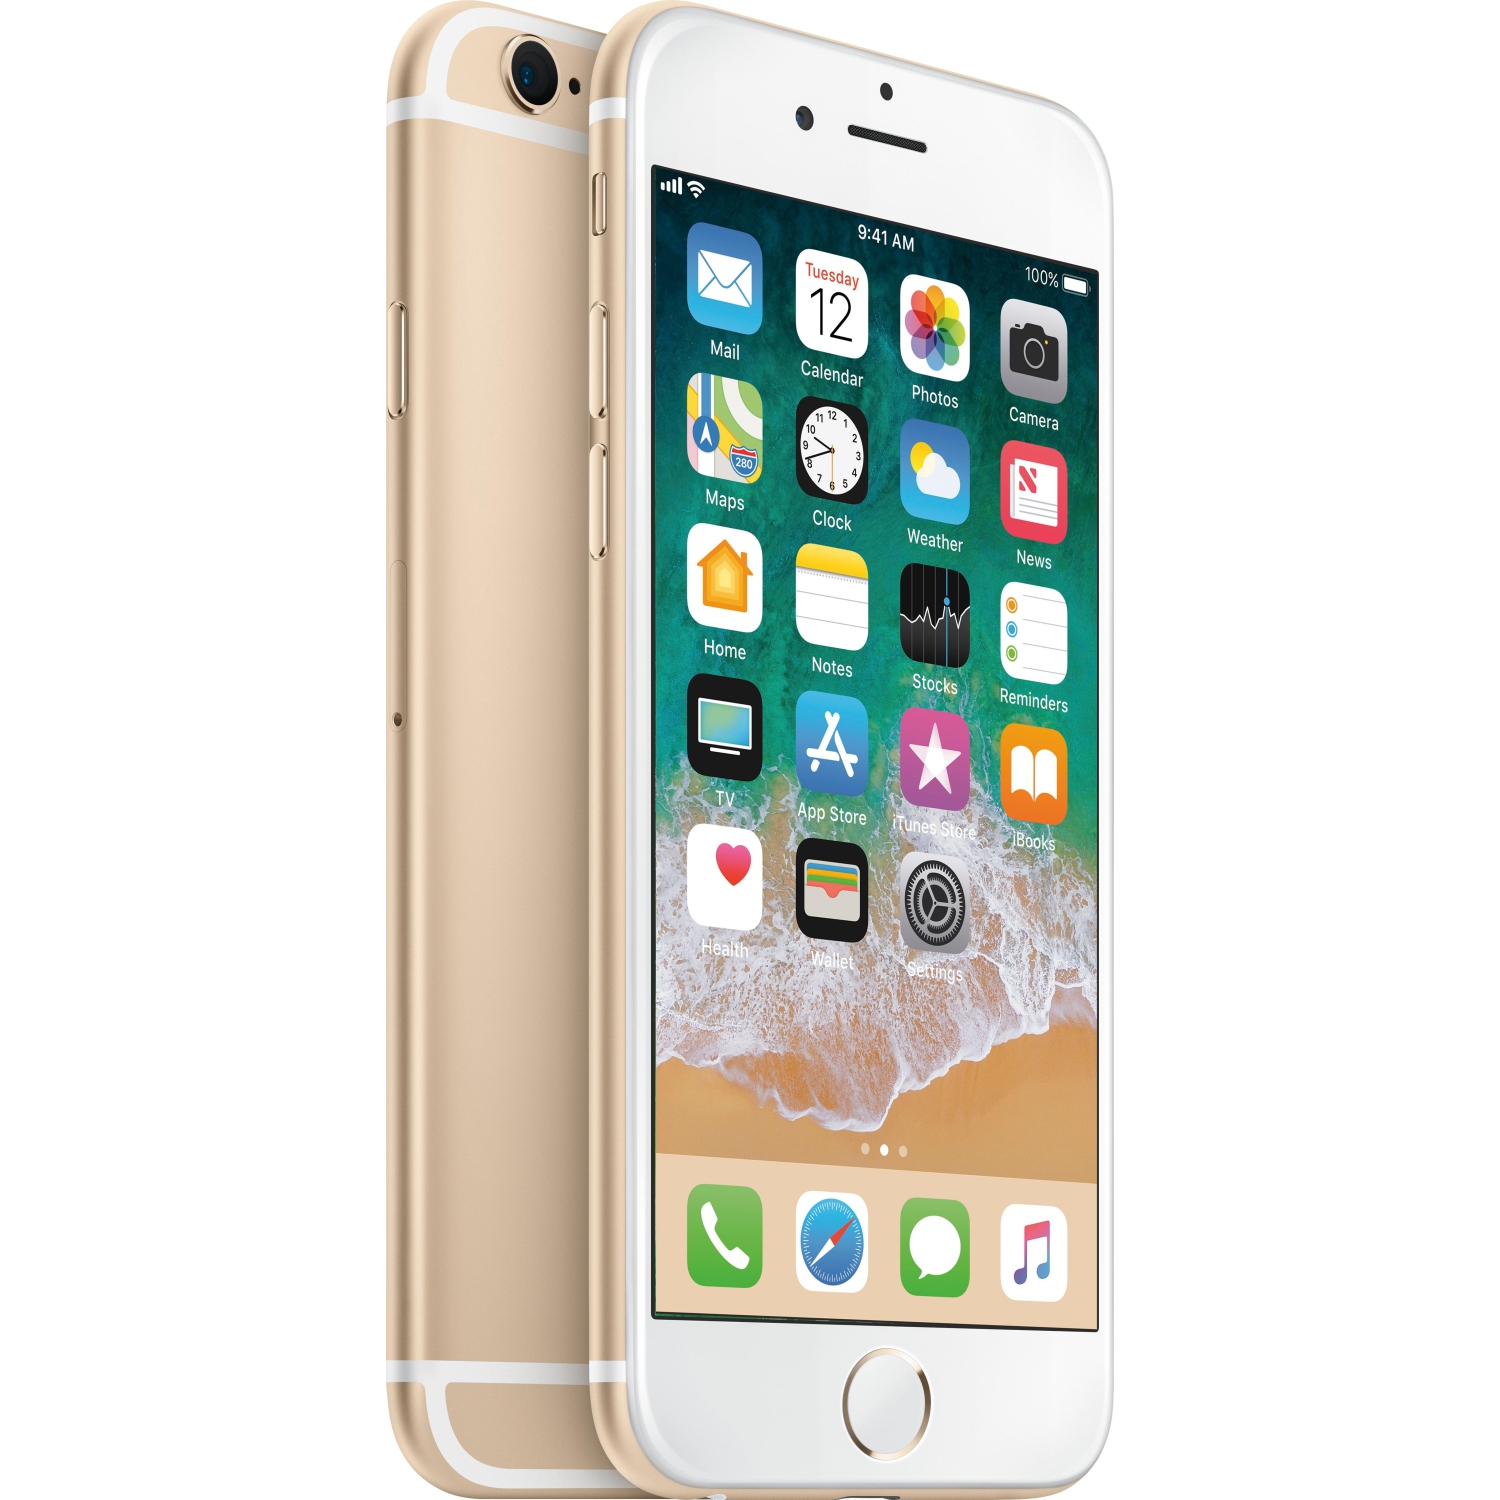 Refurbished (Good) - Apple iPhone 6s 128GB Smartphone - Gold - Unlocked